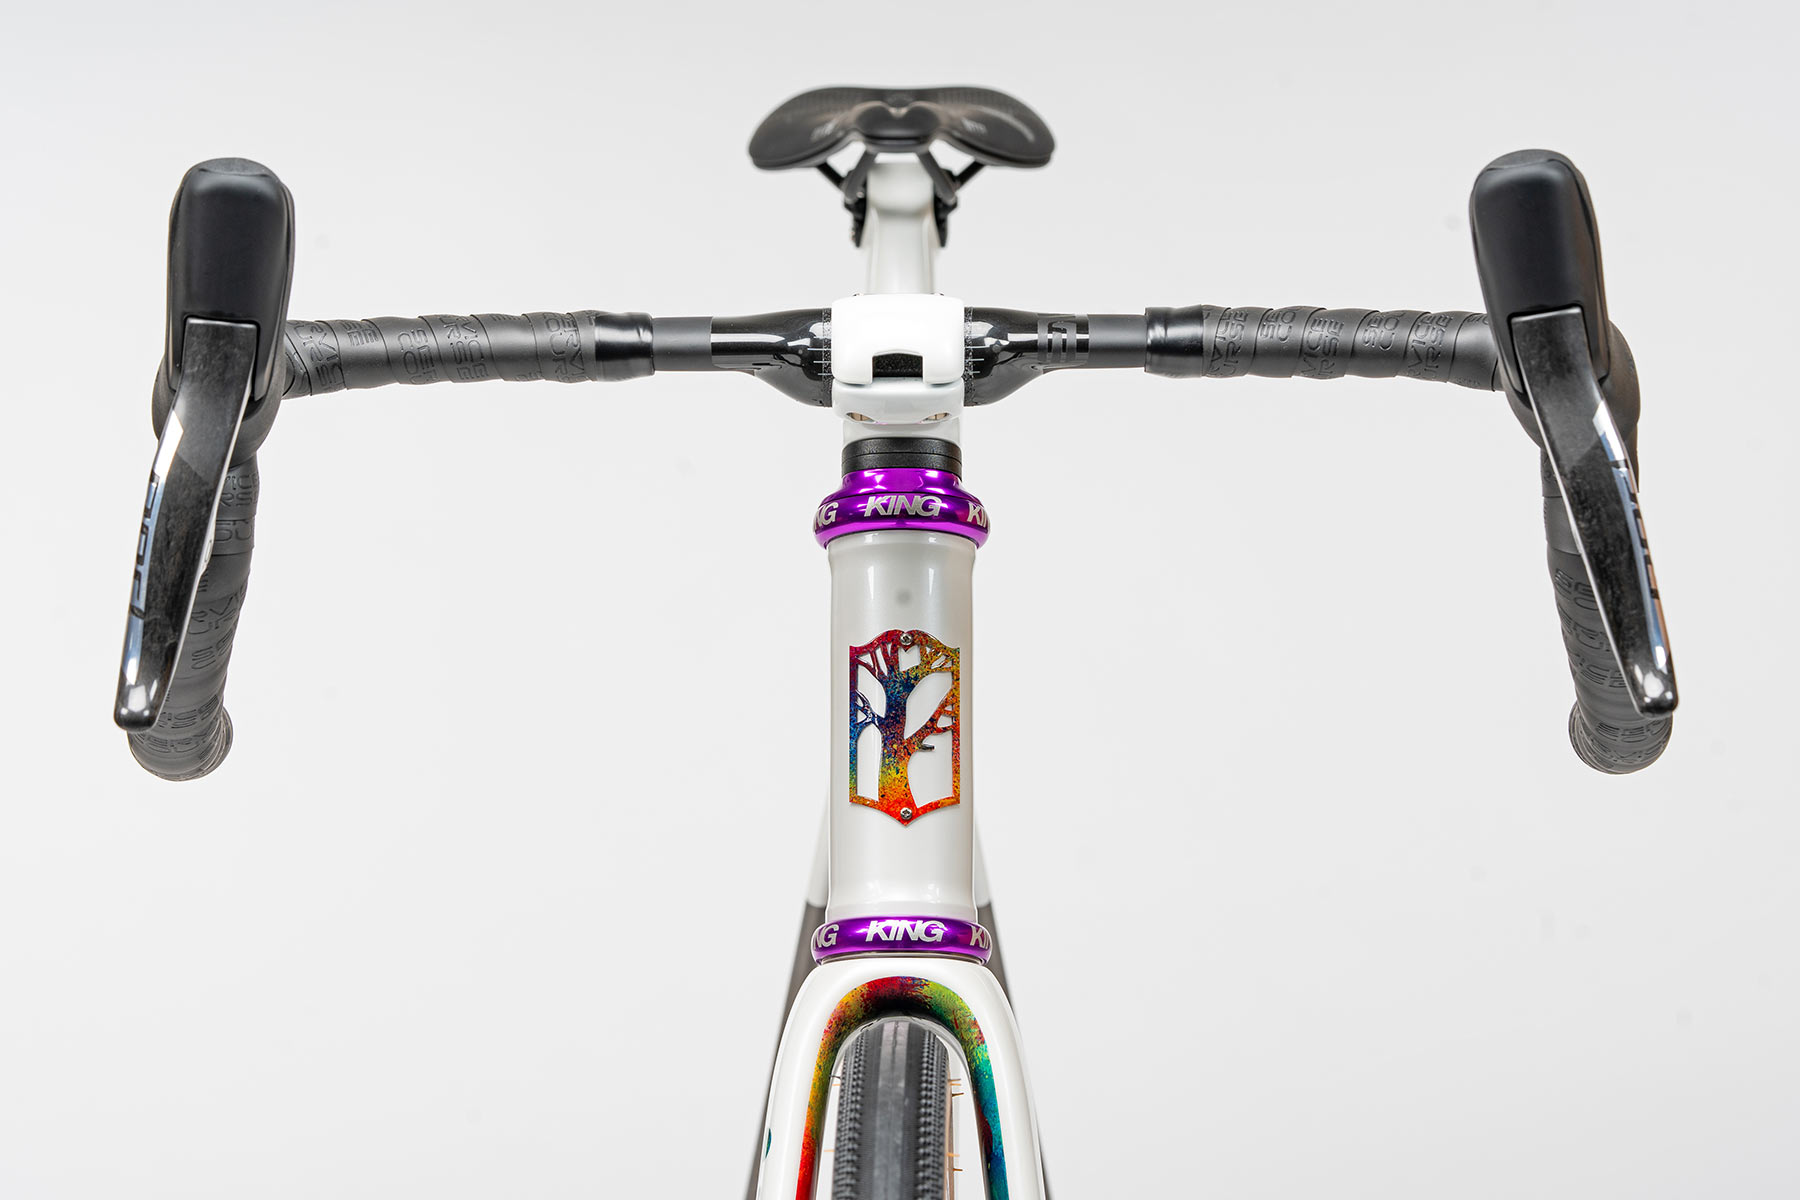 Mosaic RT-1 ITR custom titanium integrated thick road bike, Prismatica artist series, front view